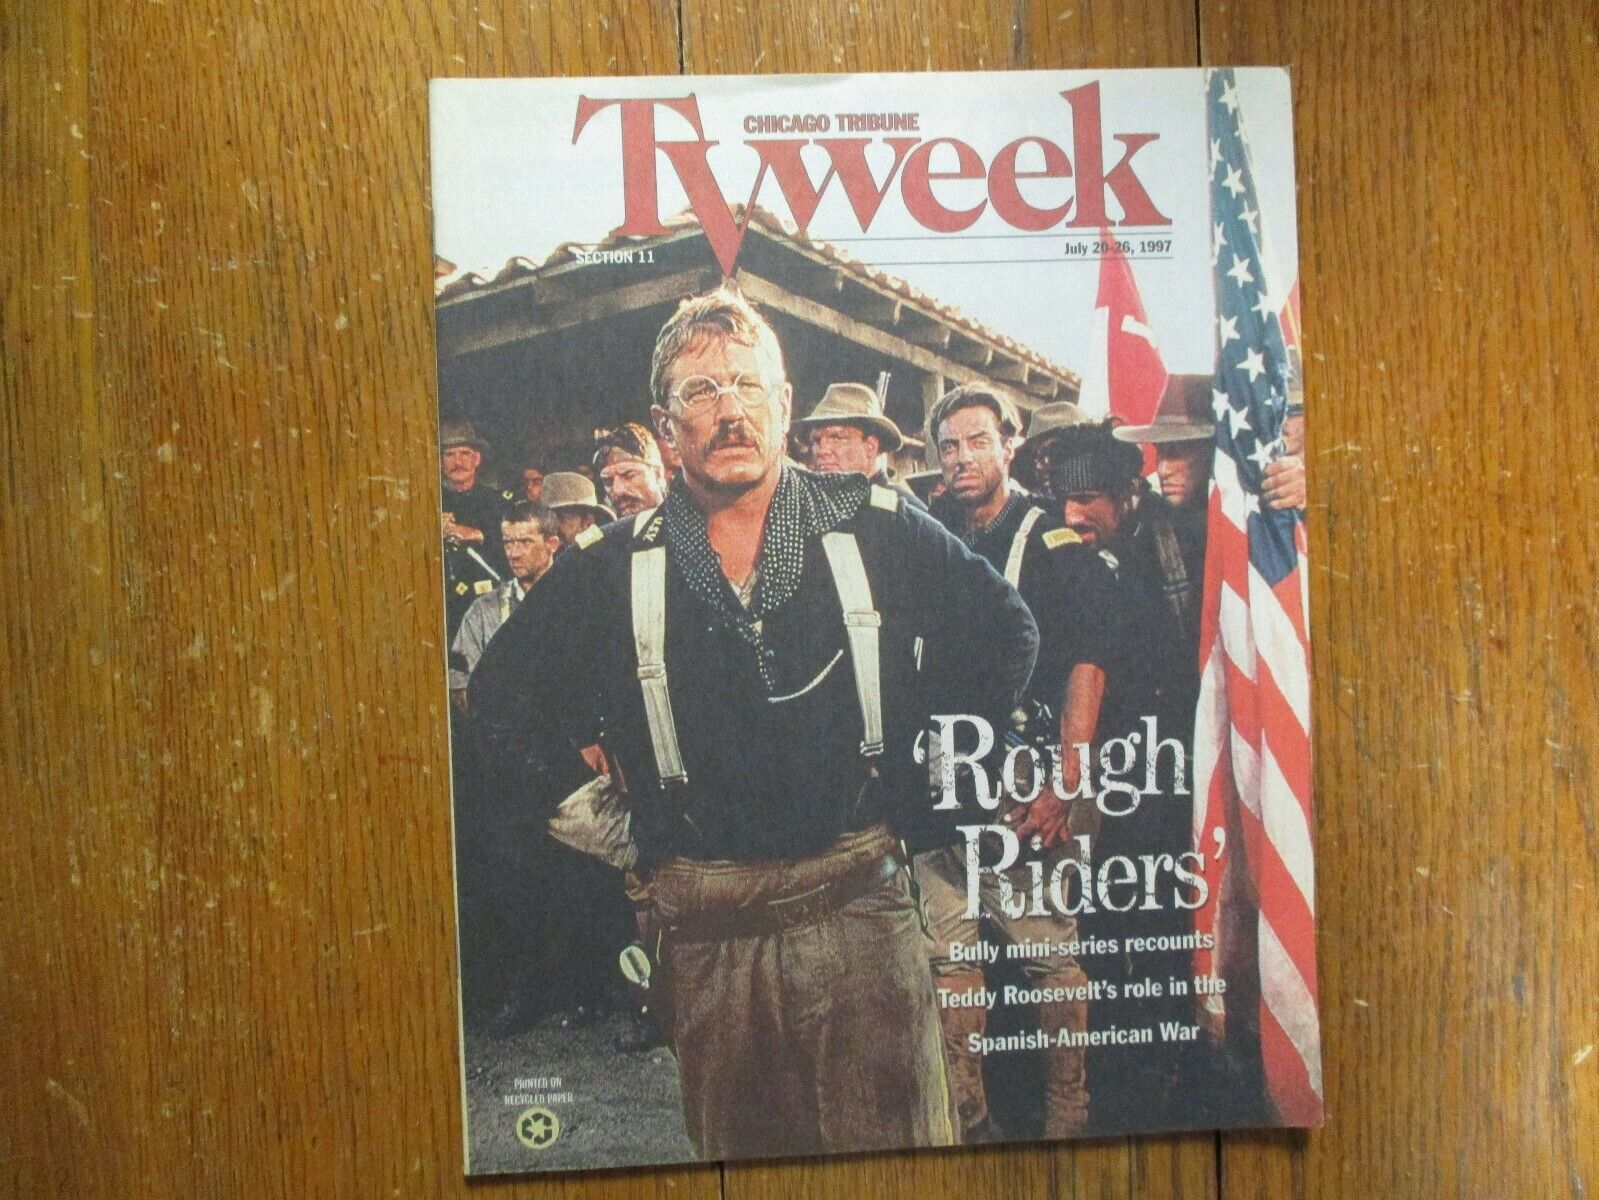 July 20-1997 Chicago Tribune TV Week Magaz(ROUGH RIDERS/TOM BERENGER/JOHN MILIUS